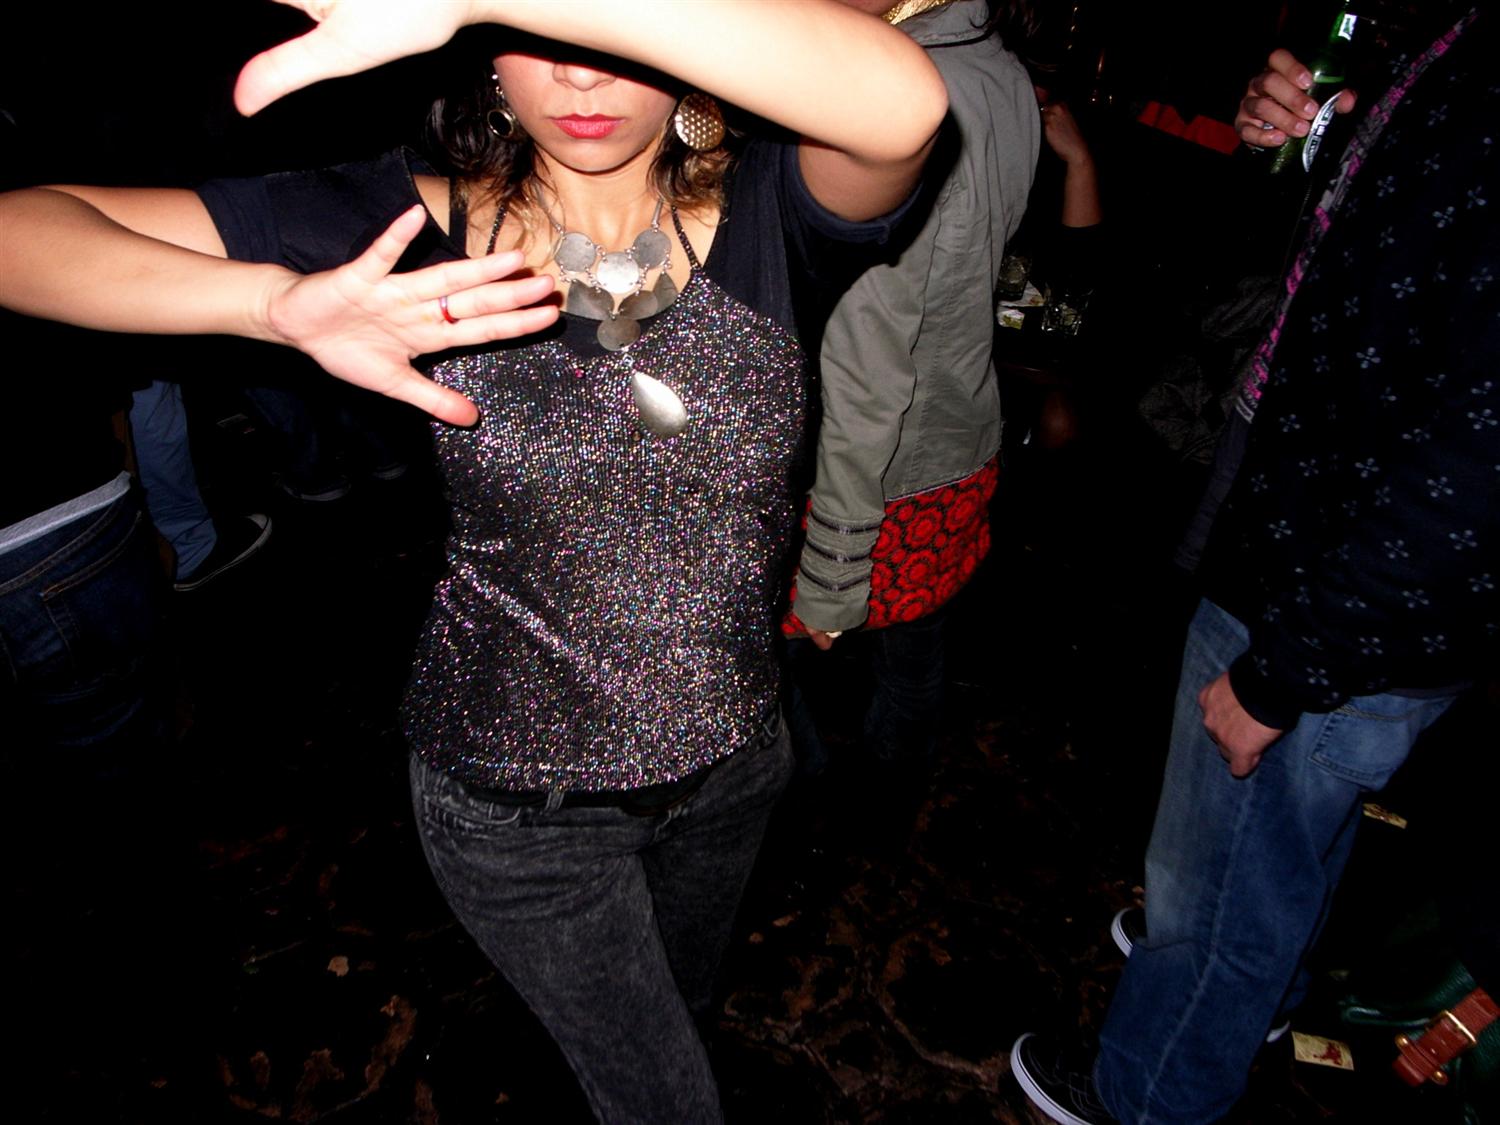 Dance Right @ La Cita on December 20, 2007